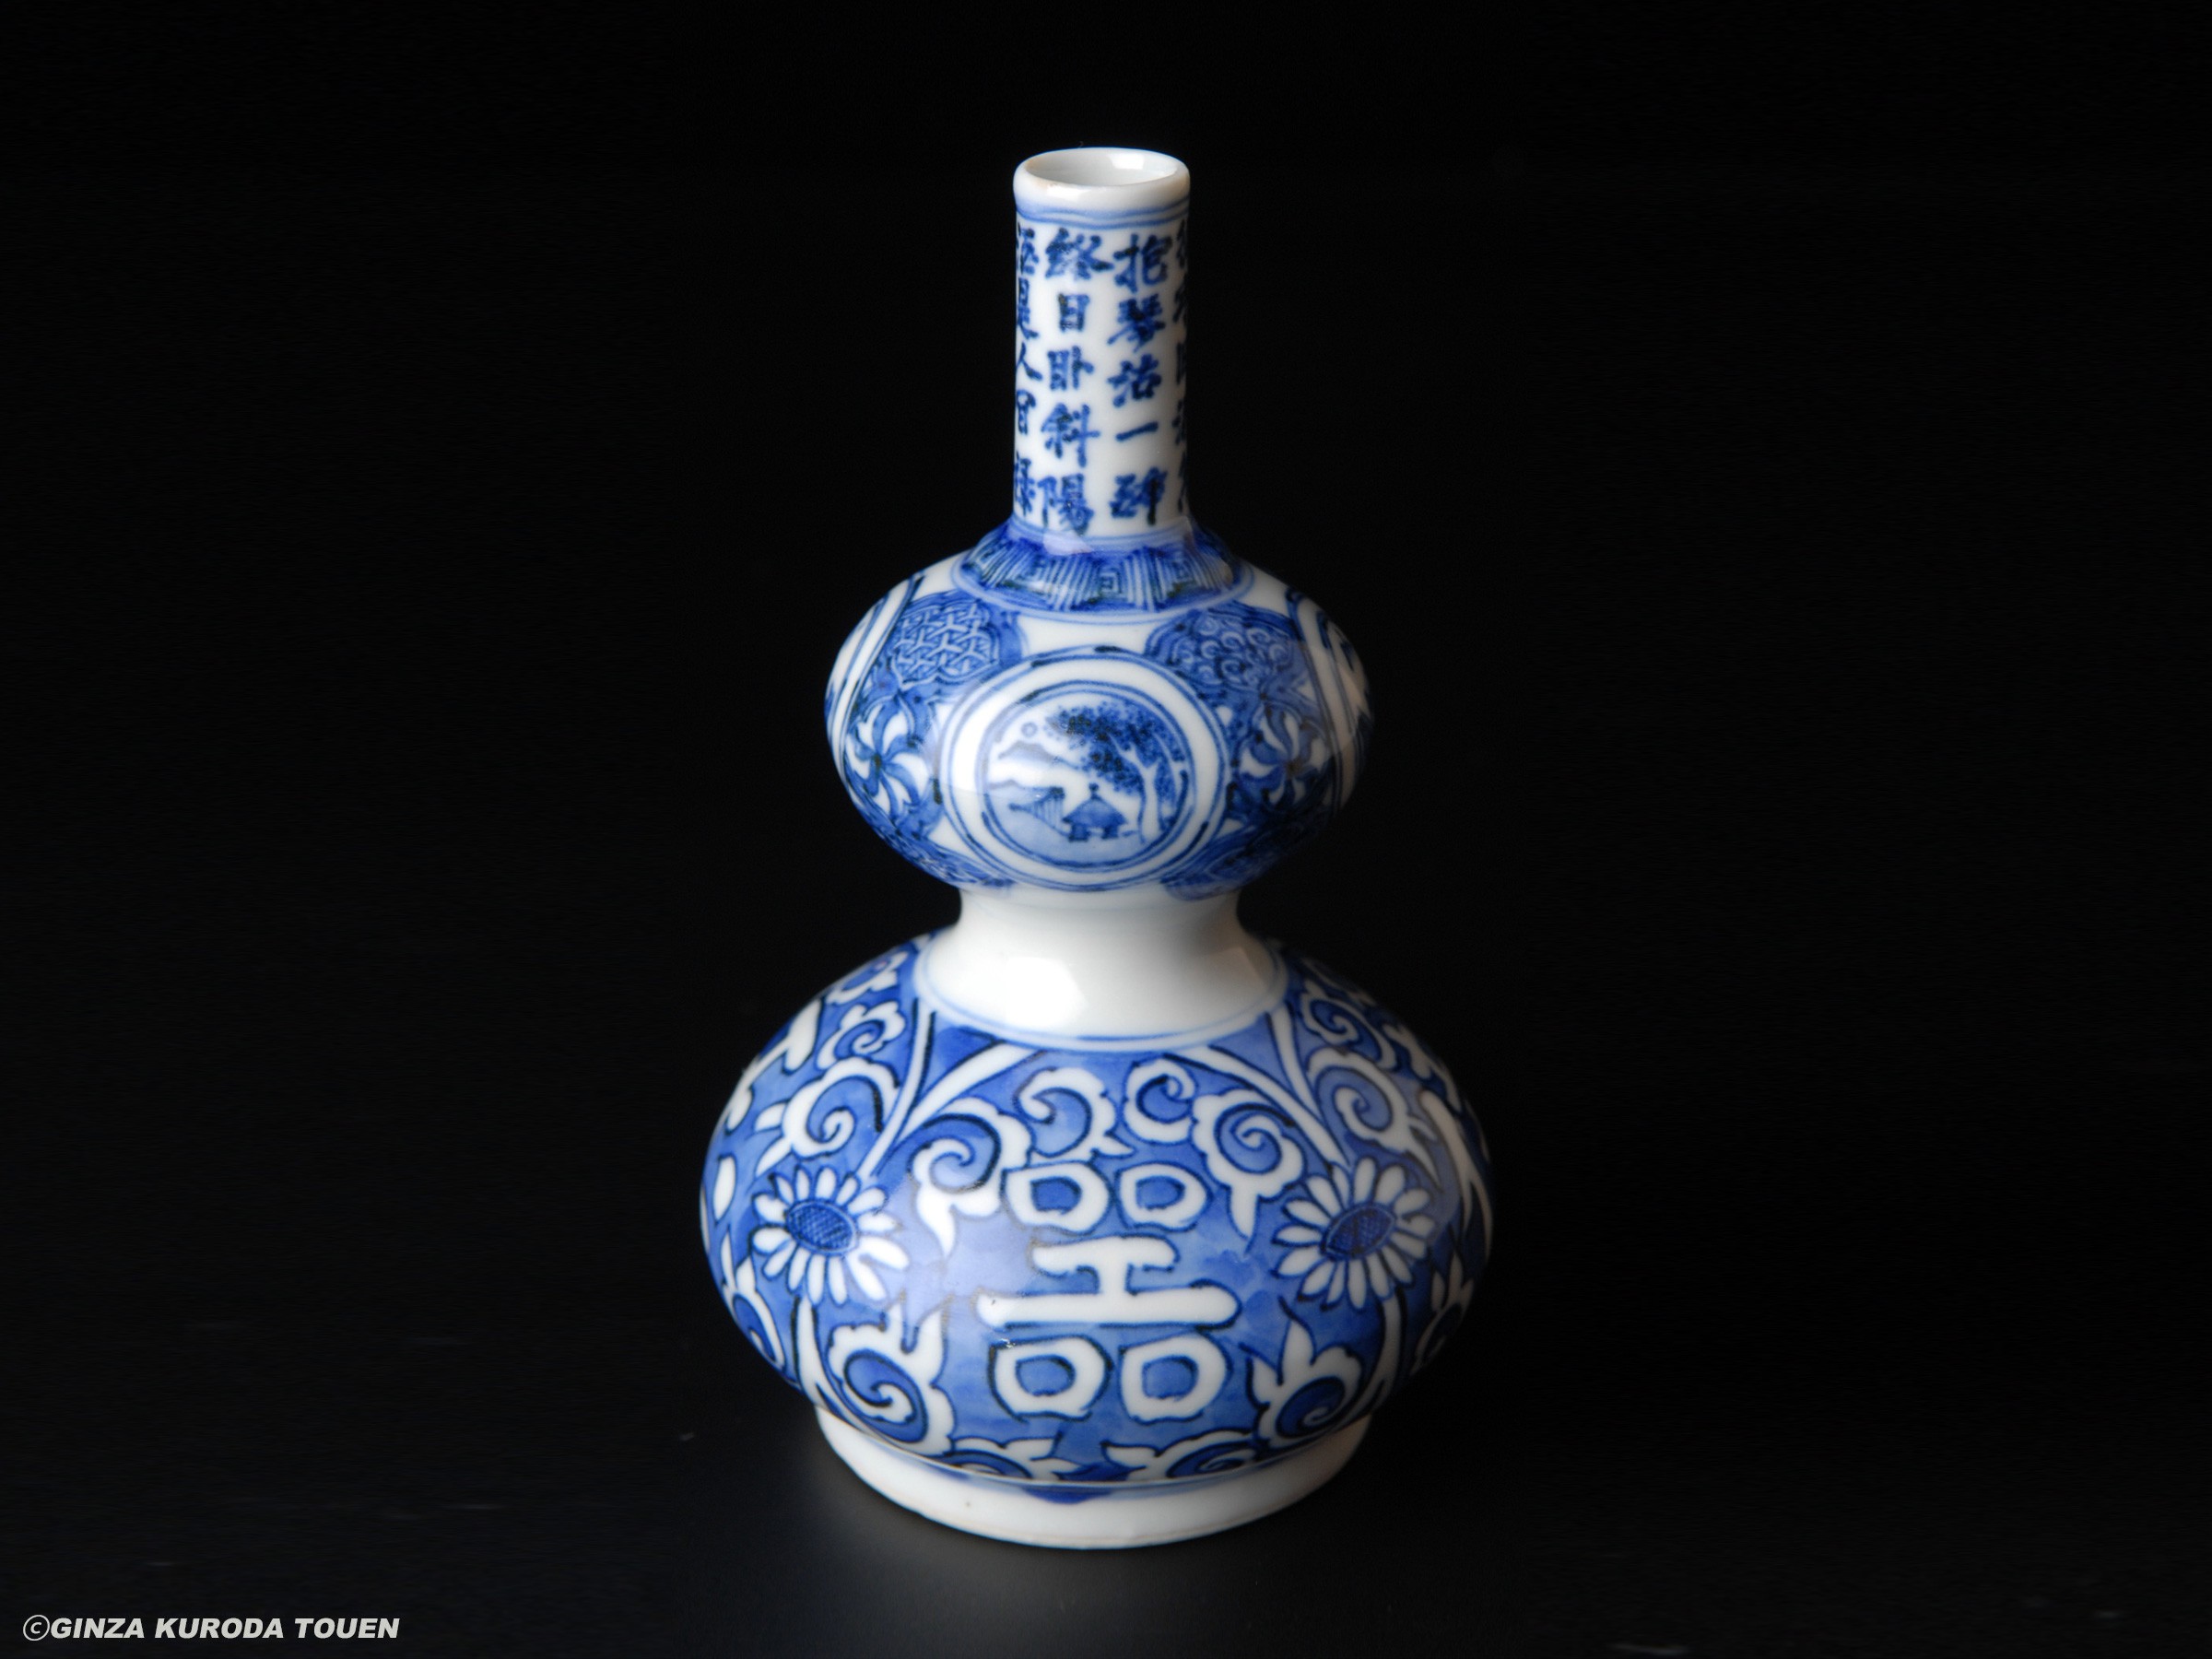 Chikushun Kawase I: Sake bottle, Blue and white